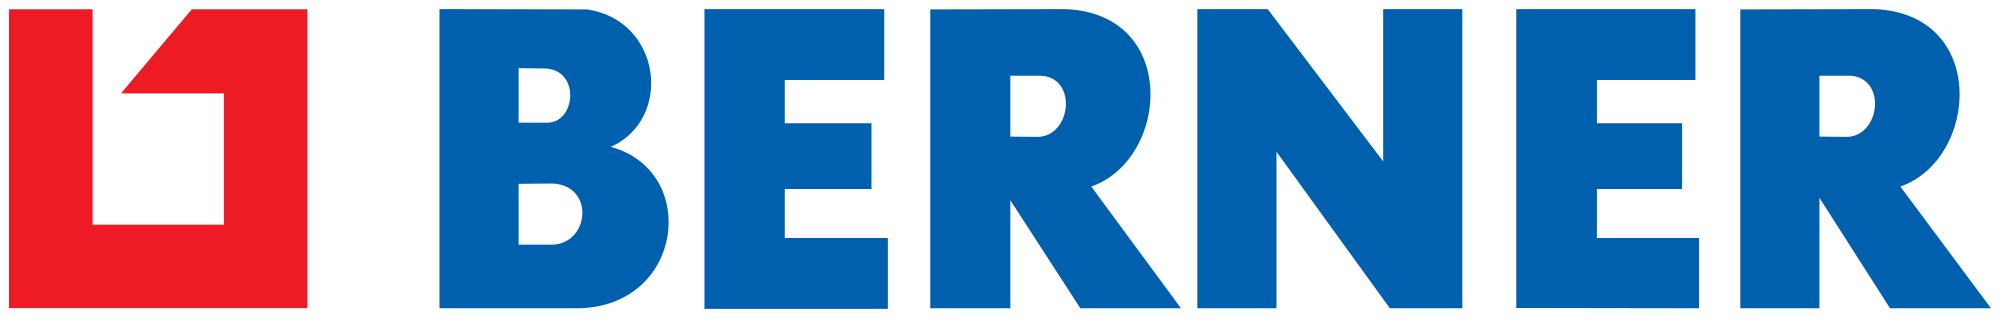 Berner-GmbH-logo